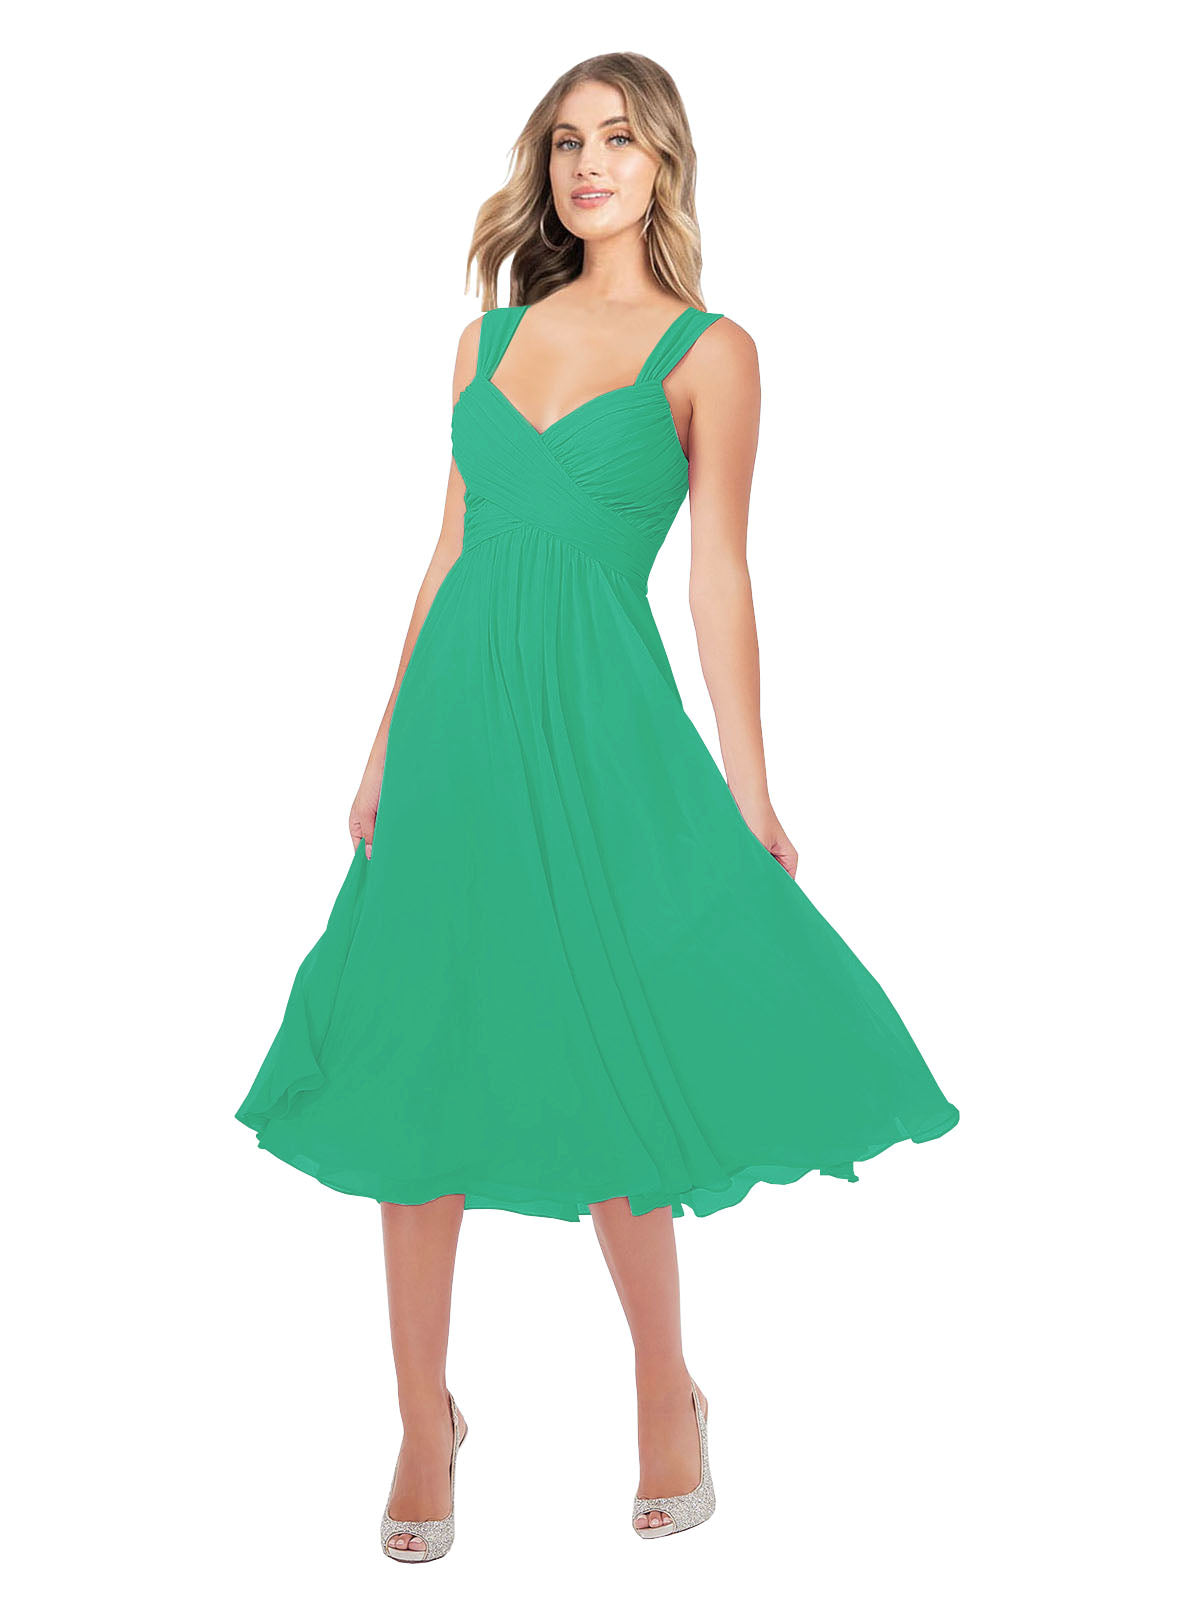 RightBrides Rodney Emerald Green A-Line Sweetheart Sleeveless Short Bridesmaid Dress